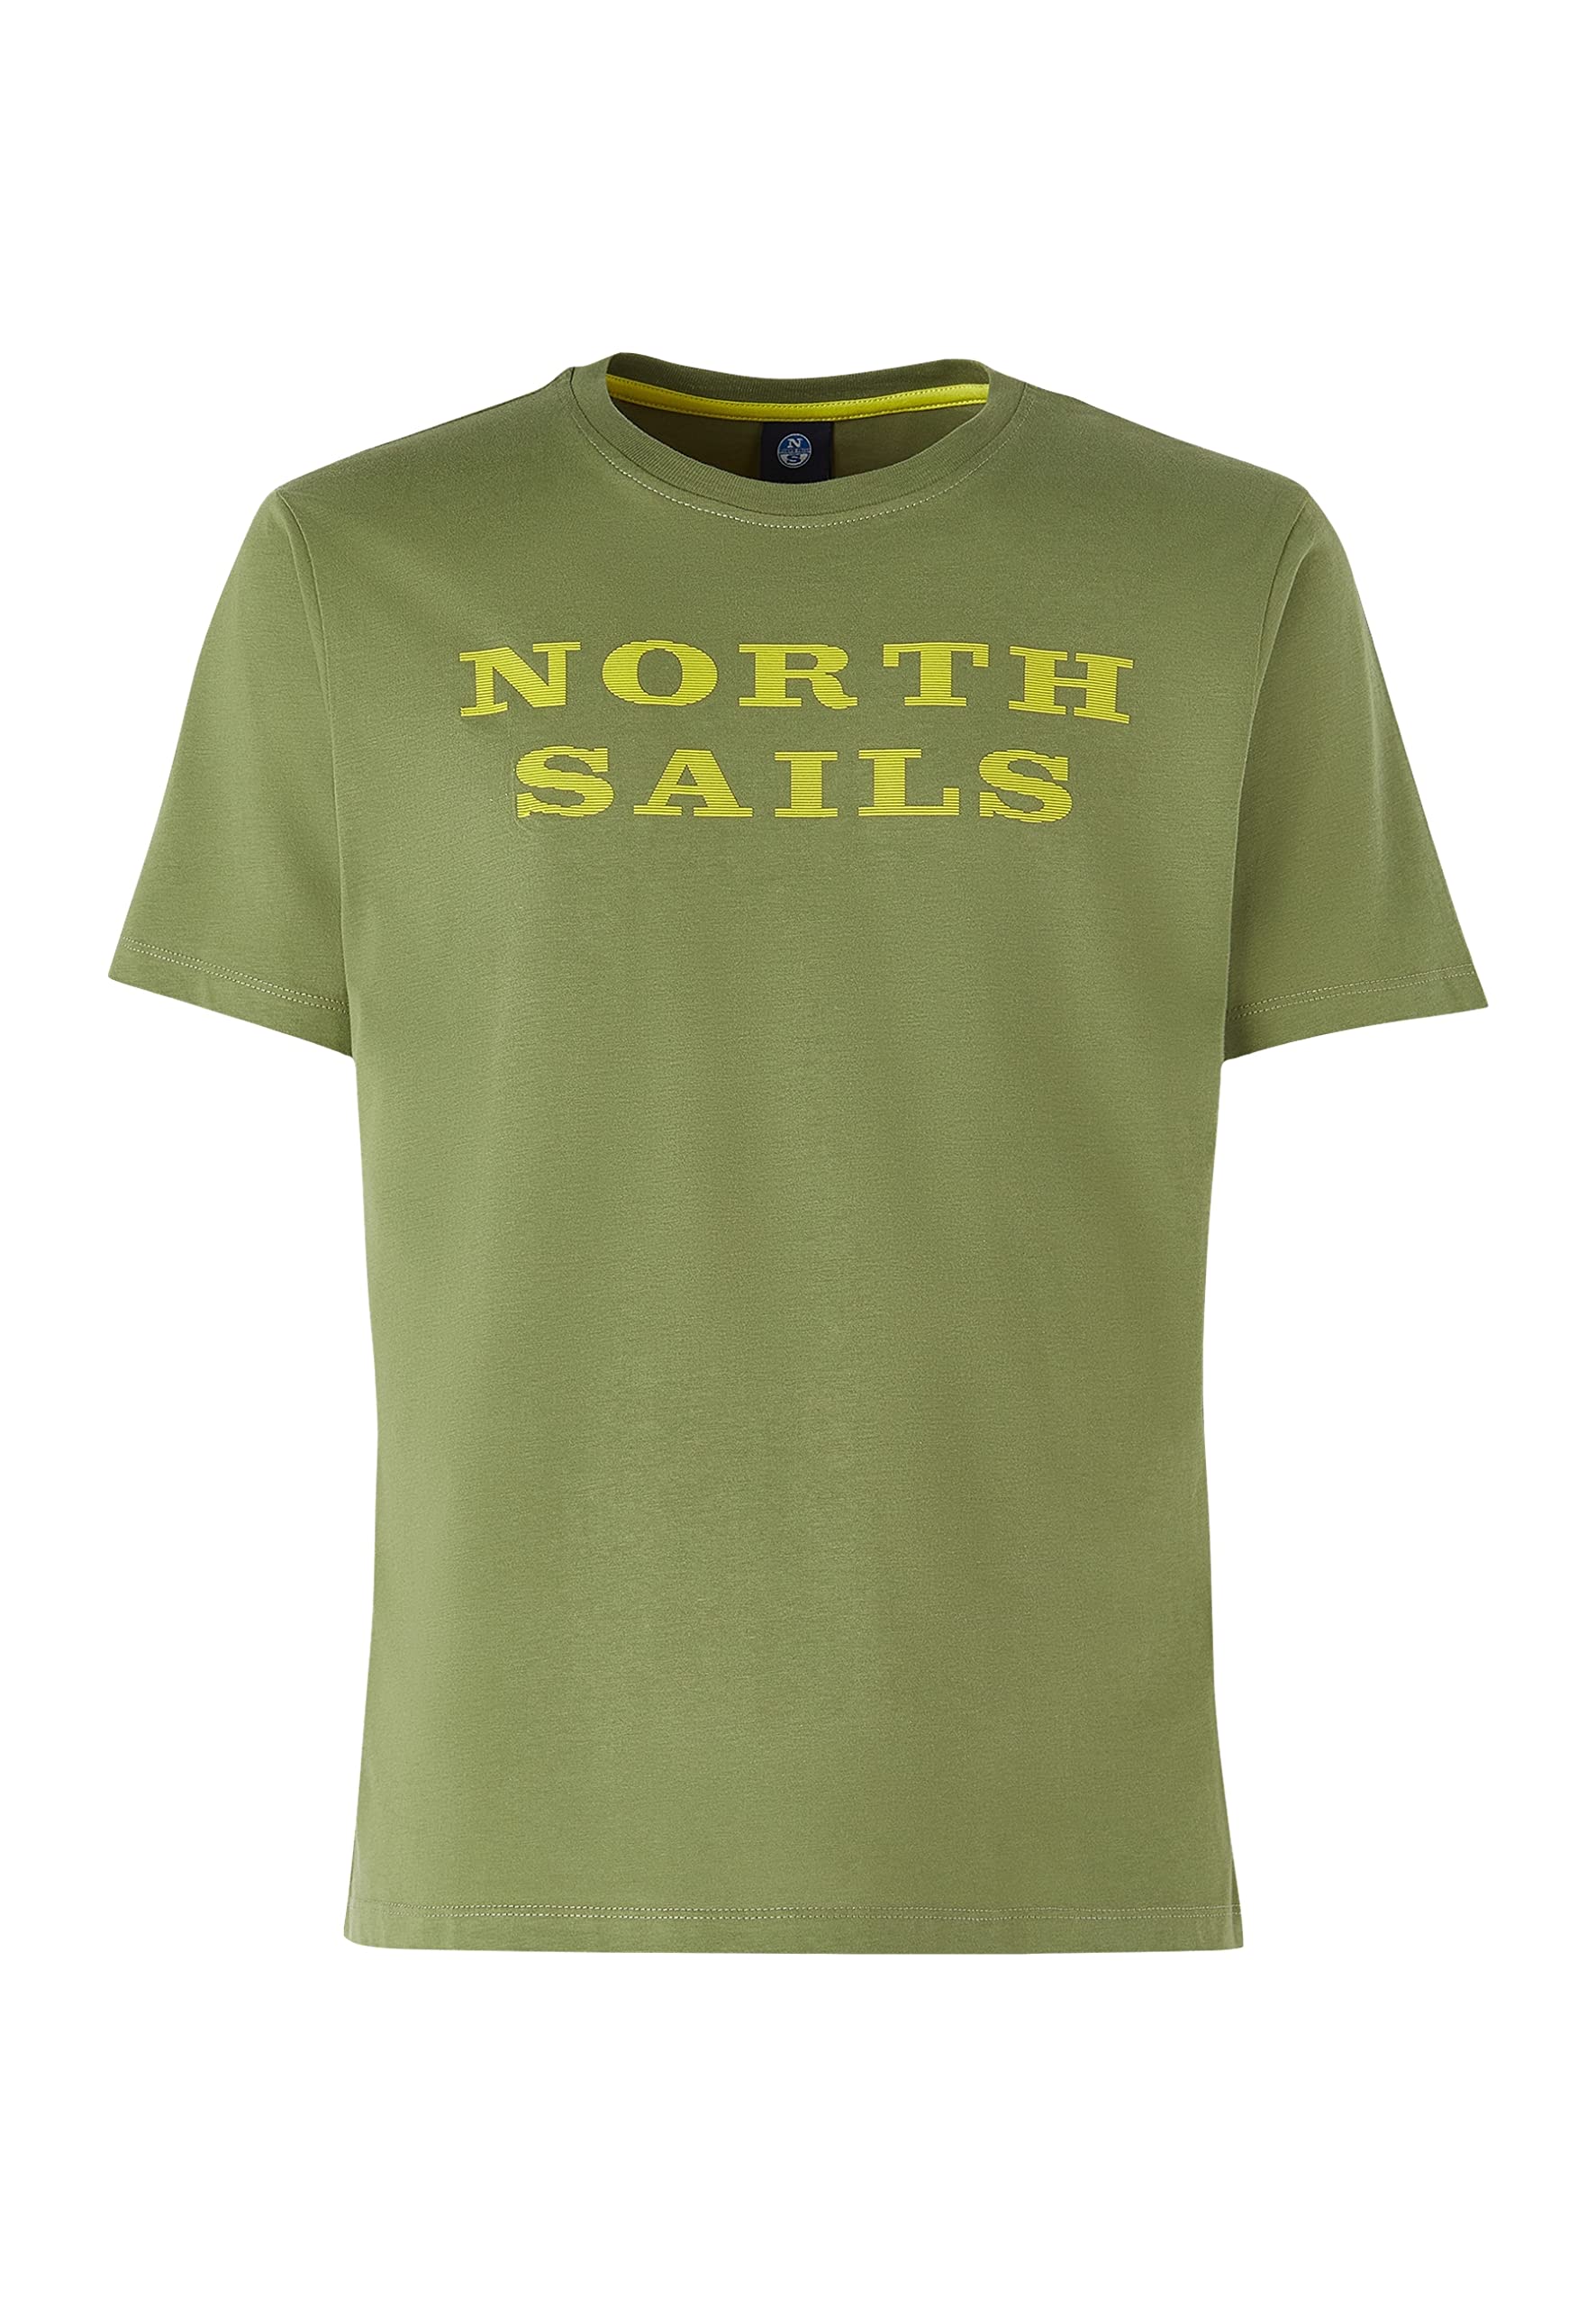 NORTH SAILS Herren S/S T-Shirt W/Graphic, Olive Green, XL